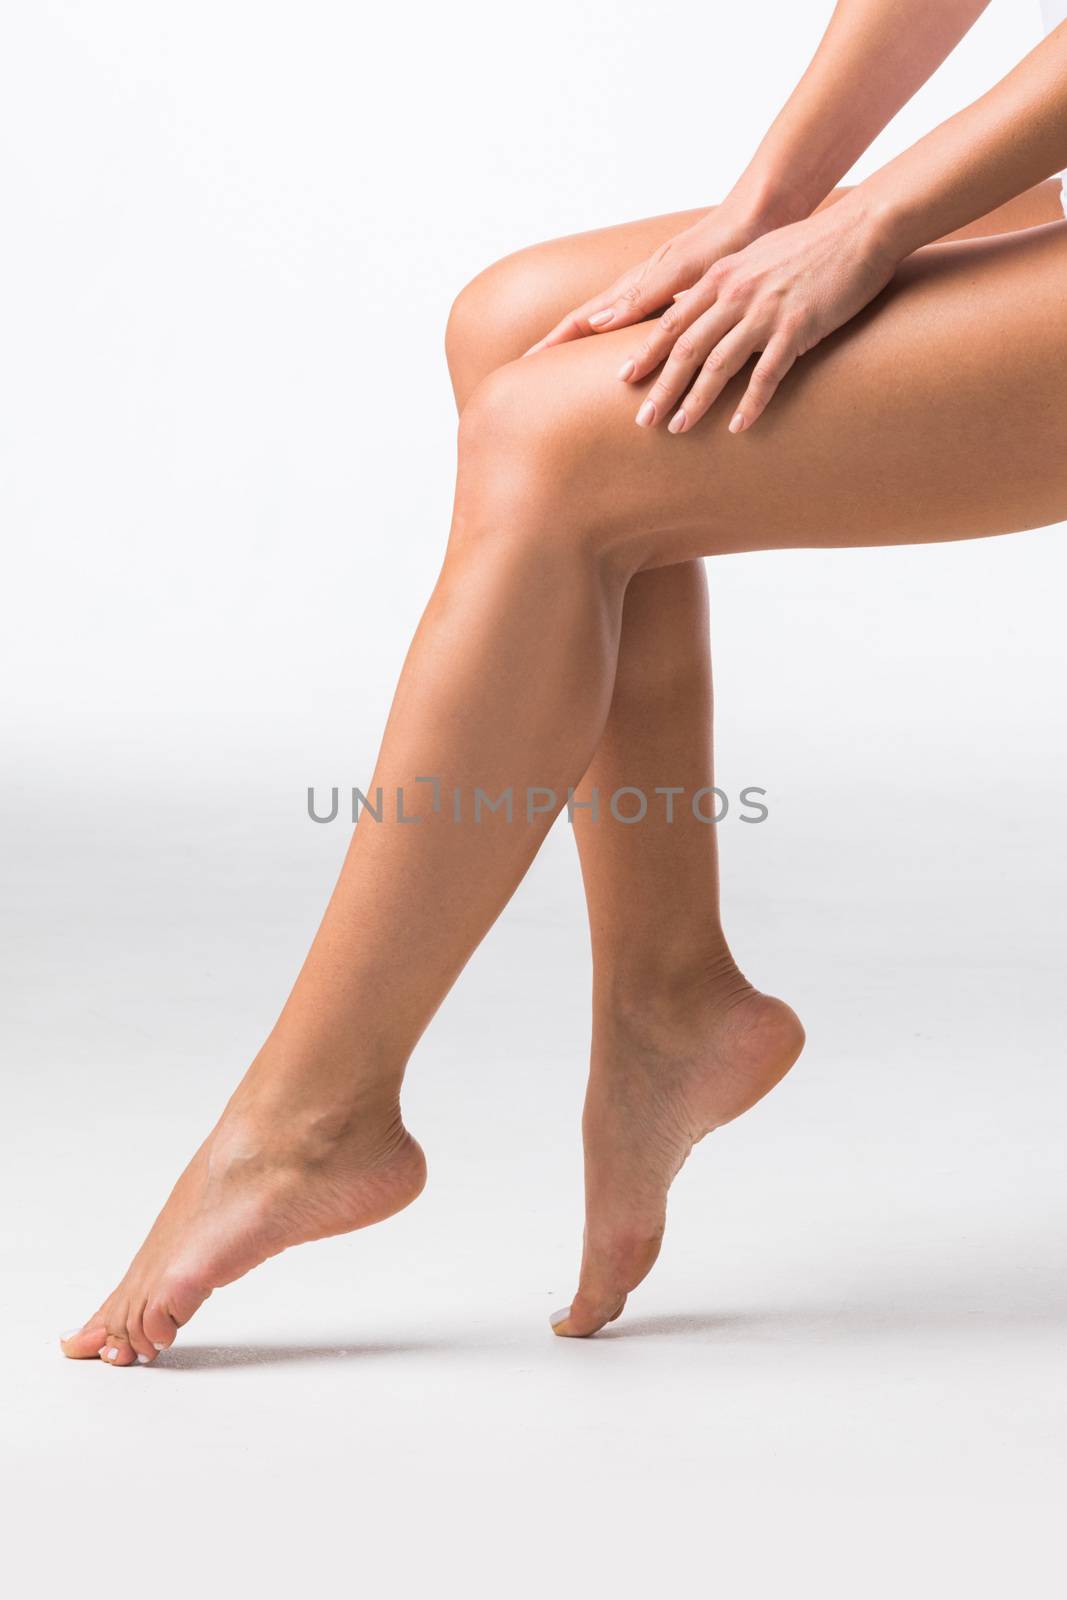 Beautiful female legs by Yellowj